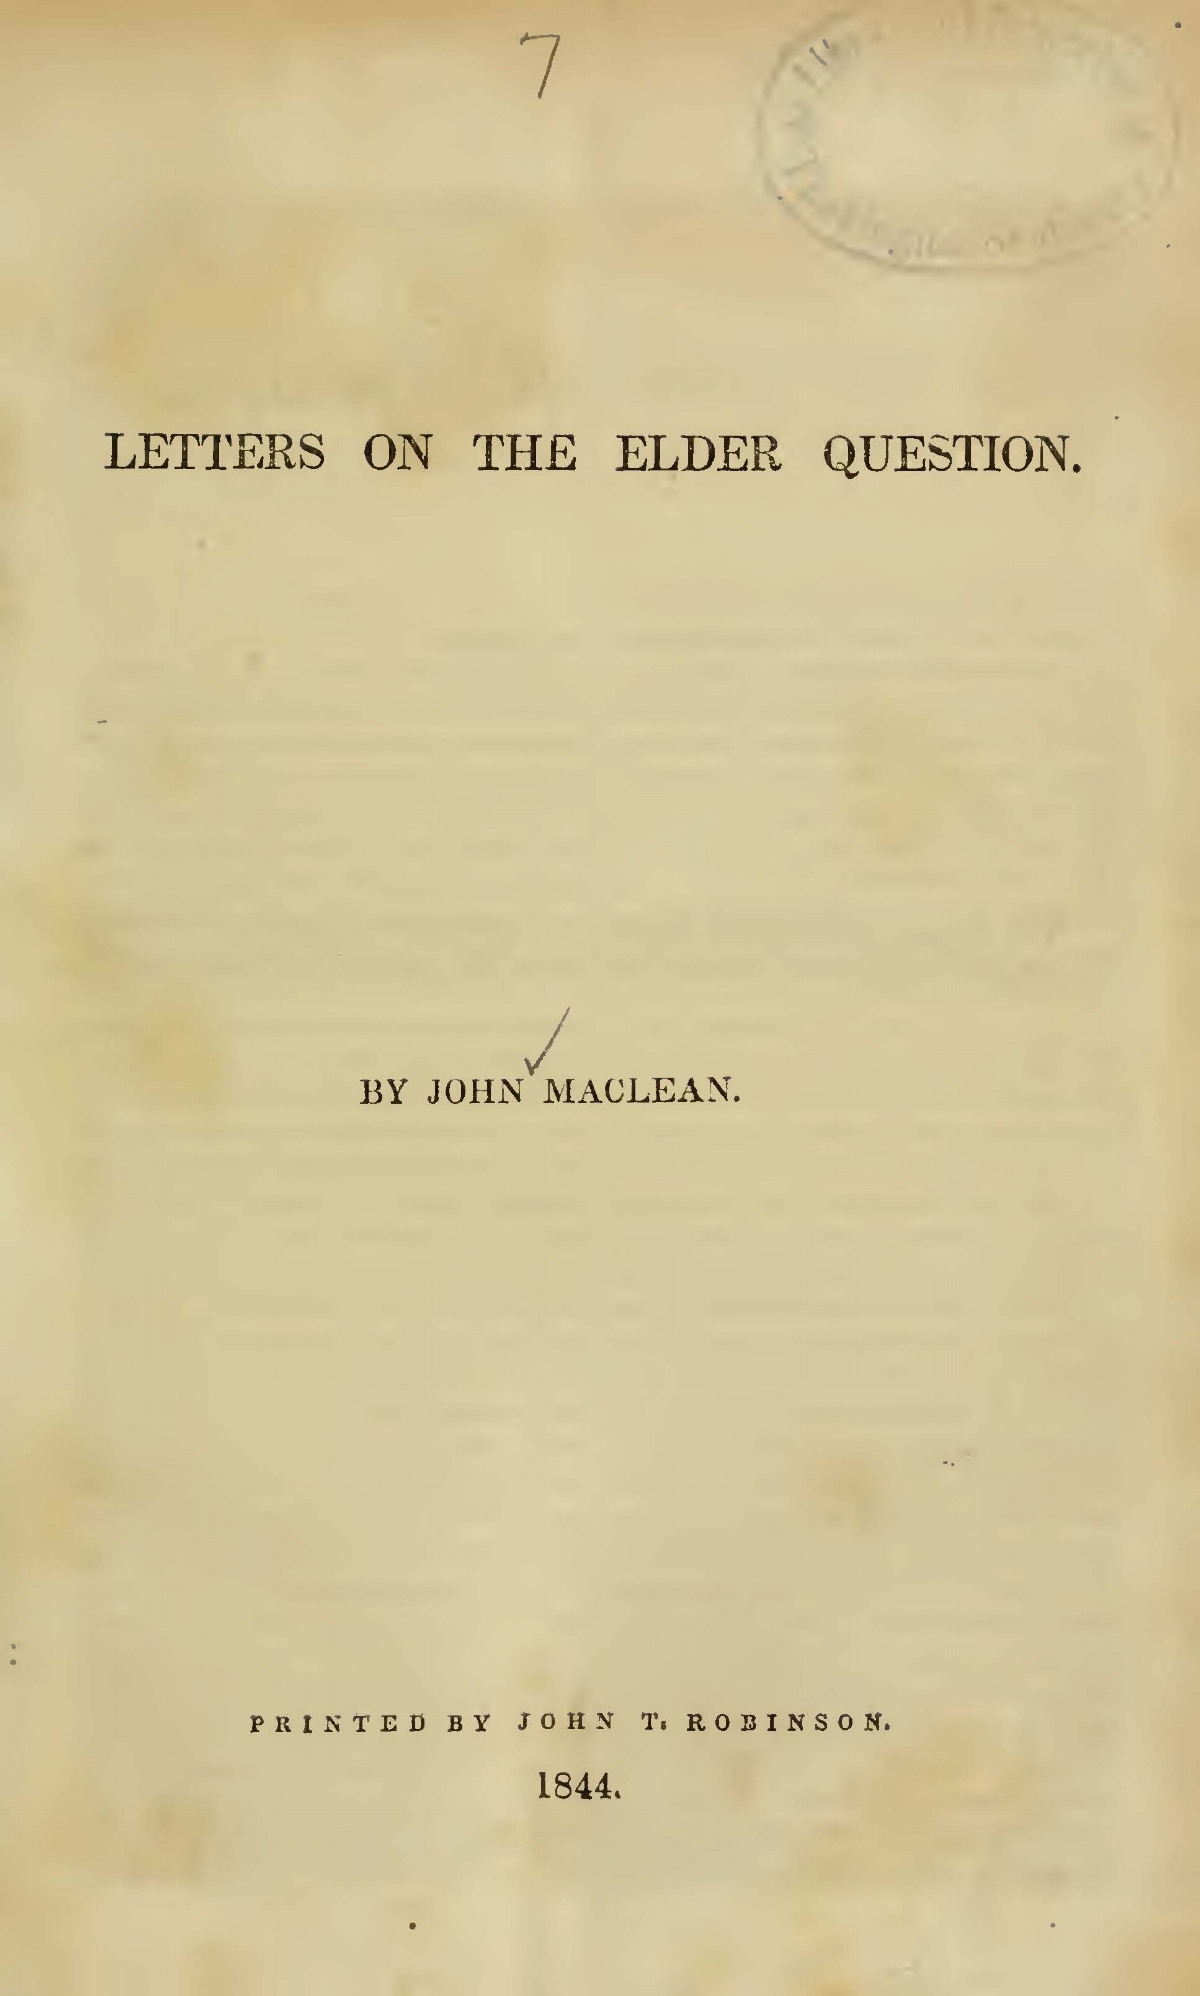 John Maclean Jr. - Wikipedia